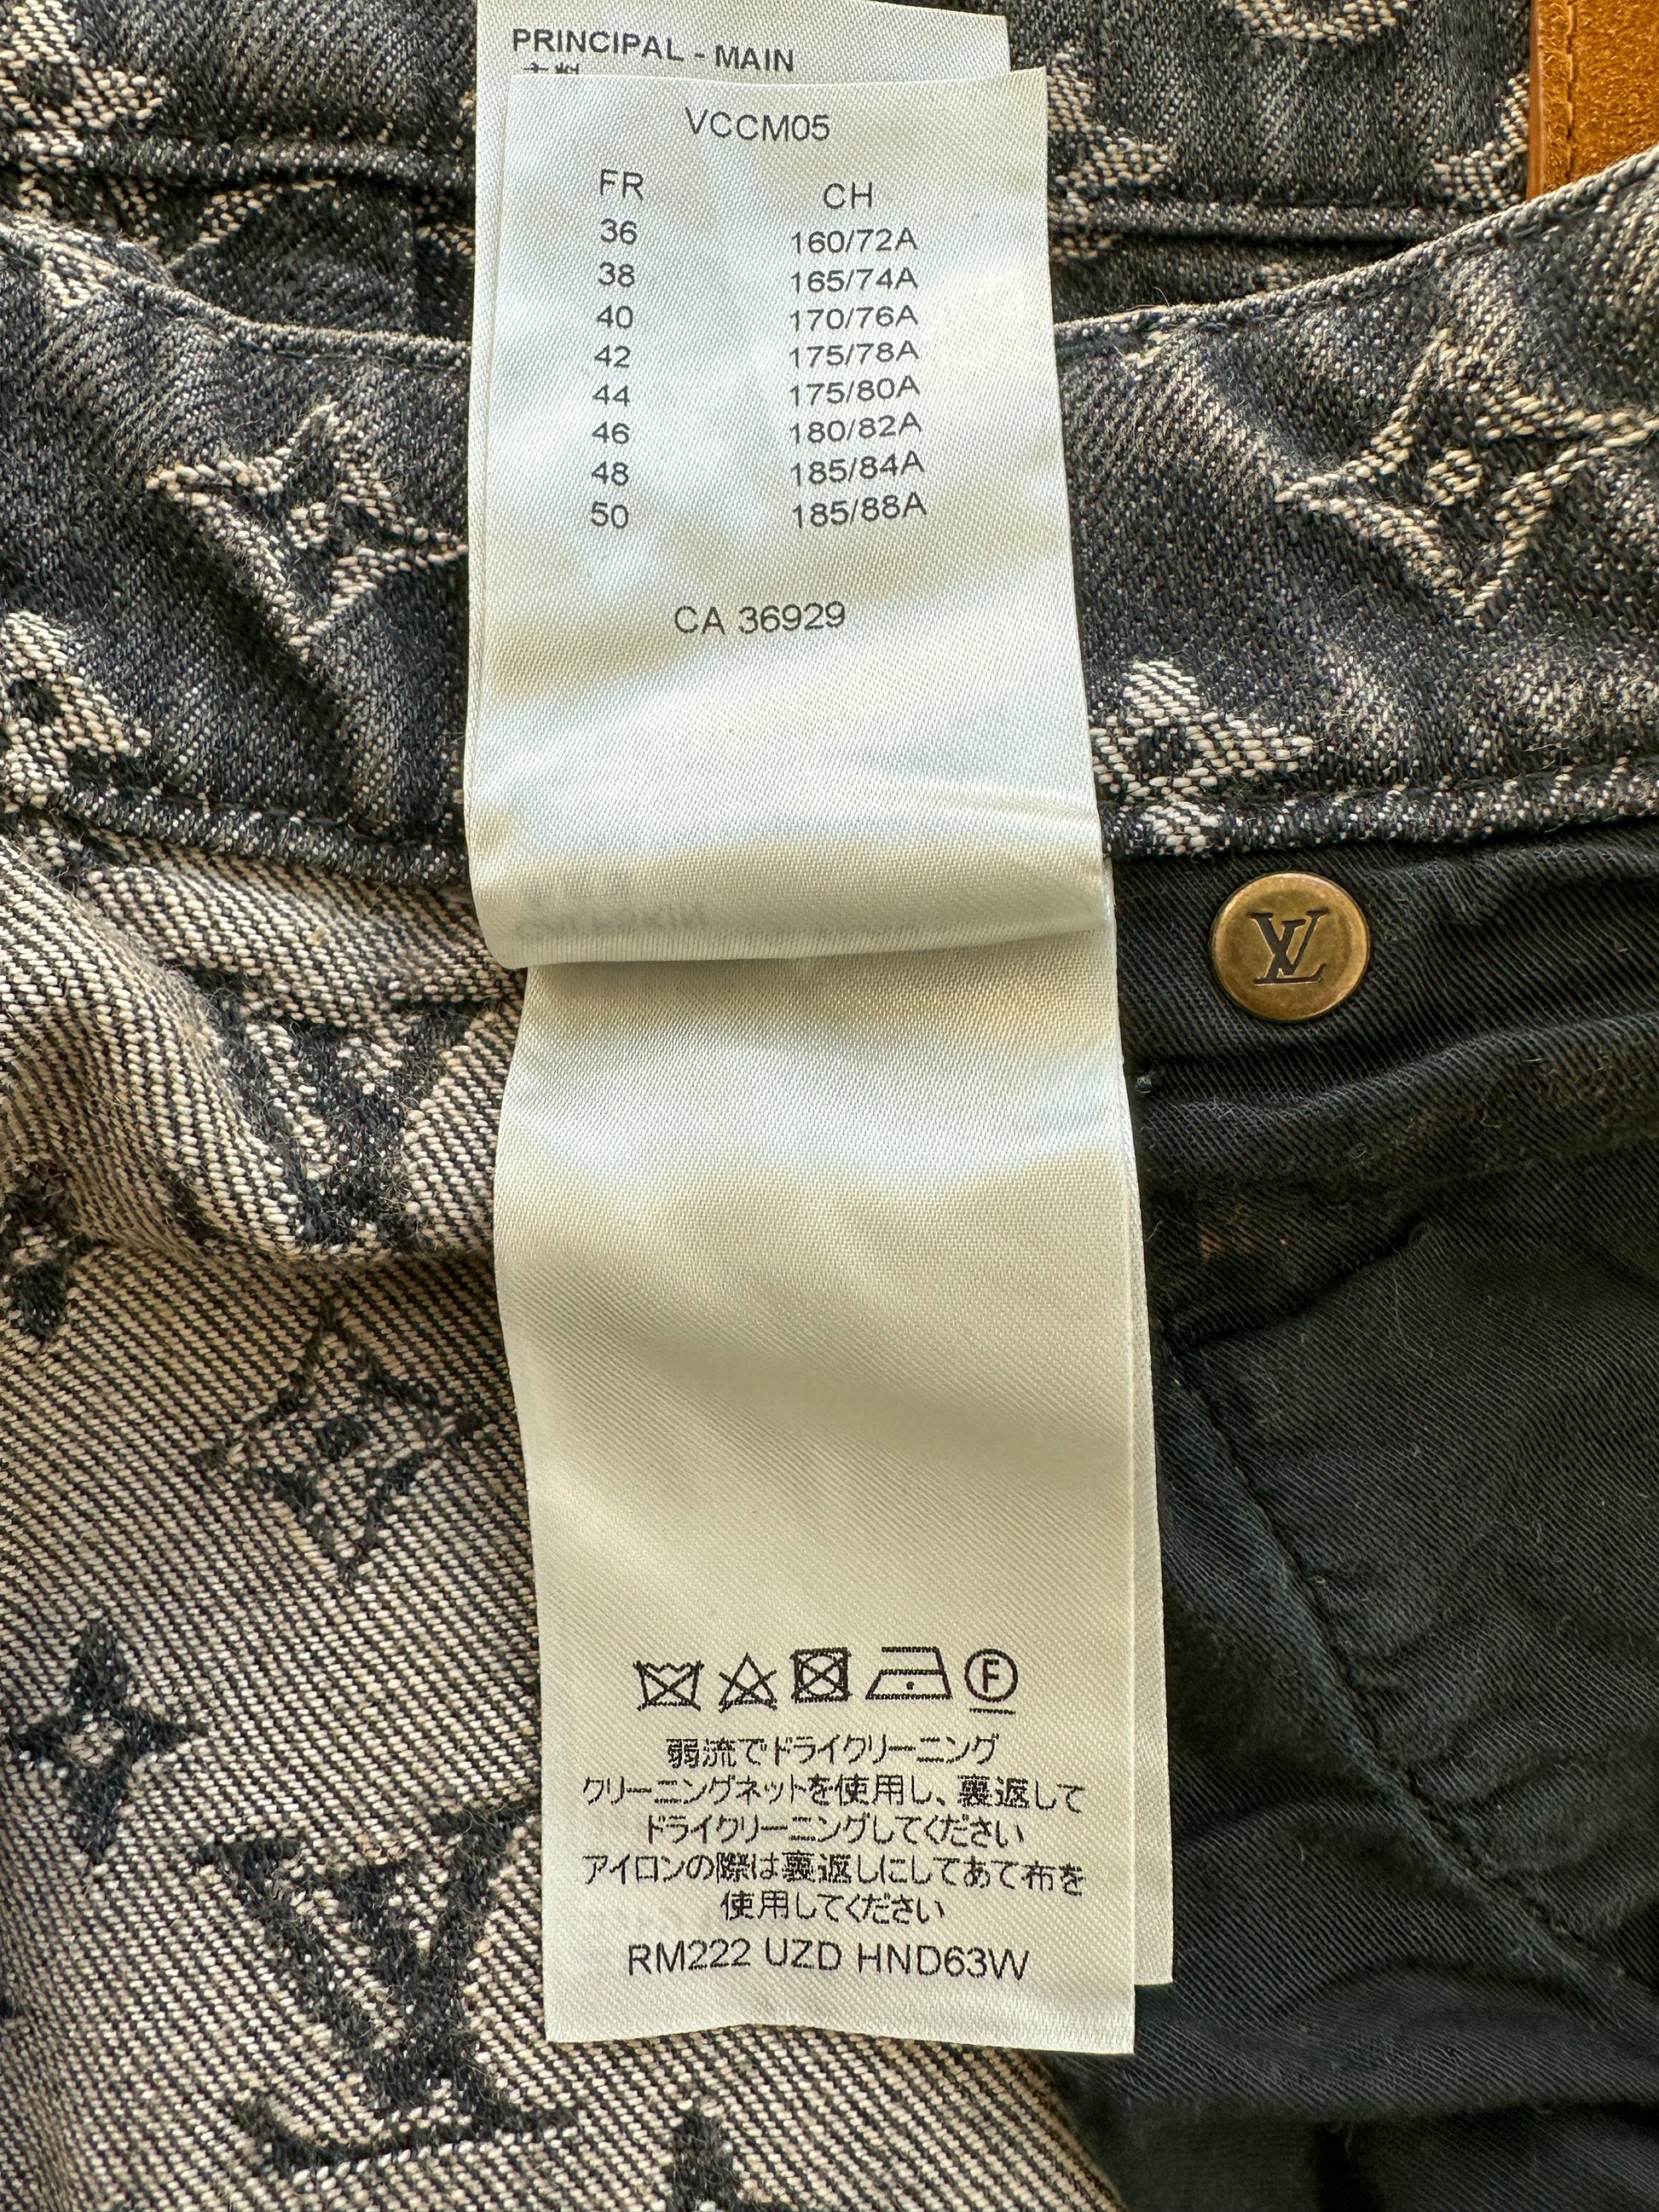 Louis Vuitton 2003 Pre-Owned Monogram Denim Backpack - ShopStyle